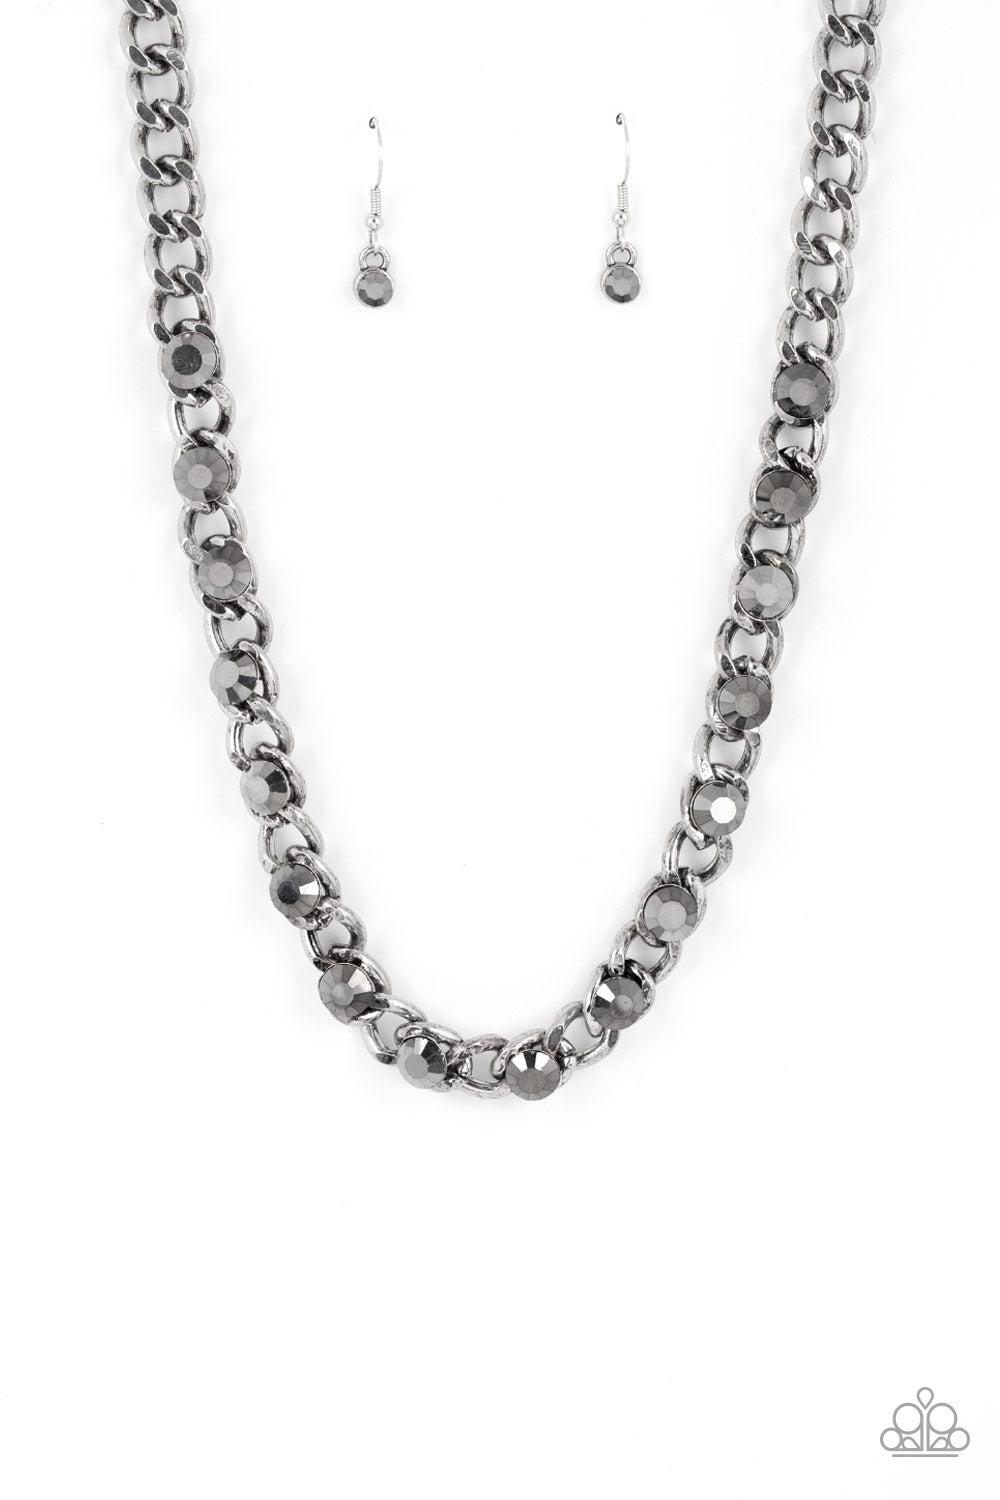 Major Moxie Silver & Hematite Rhinestone Necklace - Paparazzi Accessories- lightbox - CarasShop.com - $5 Jewelry by Cara Jewels